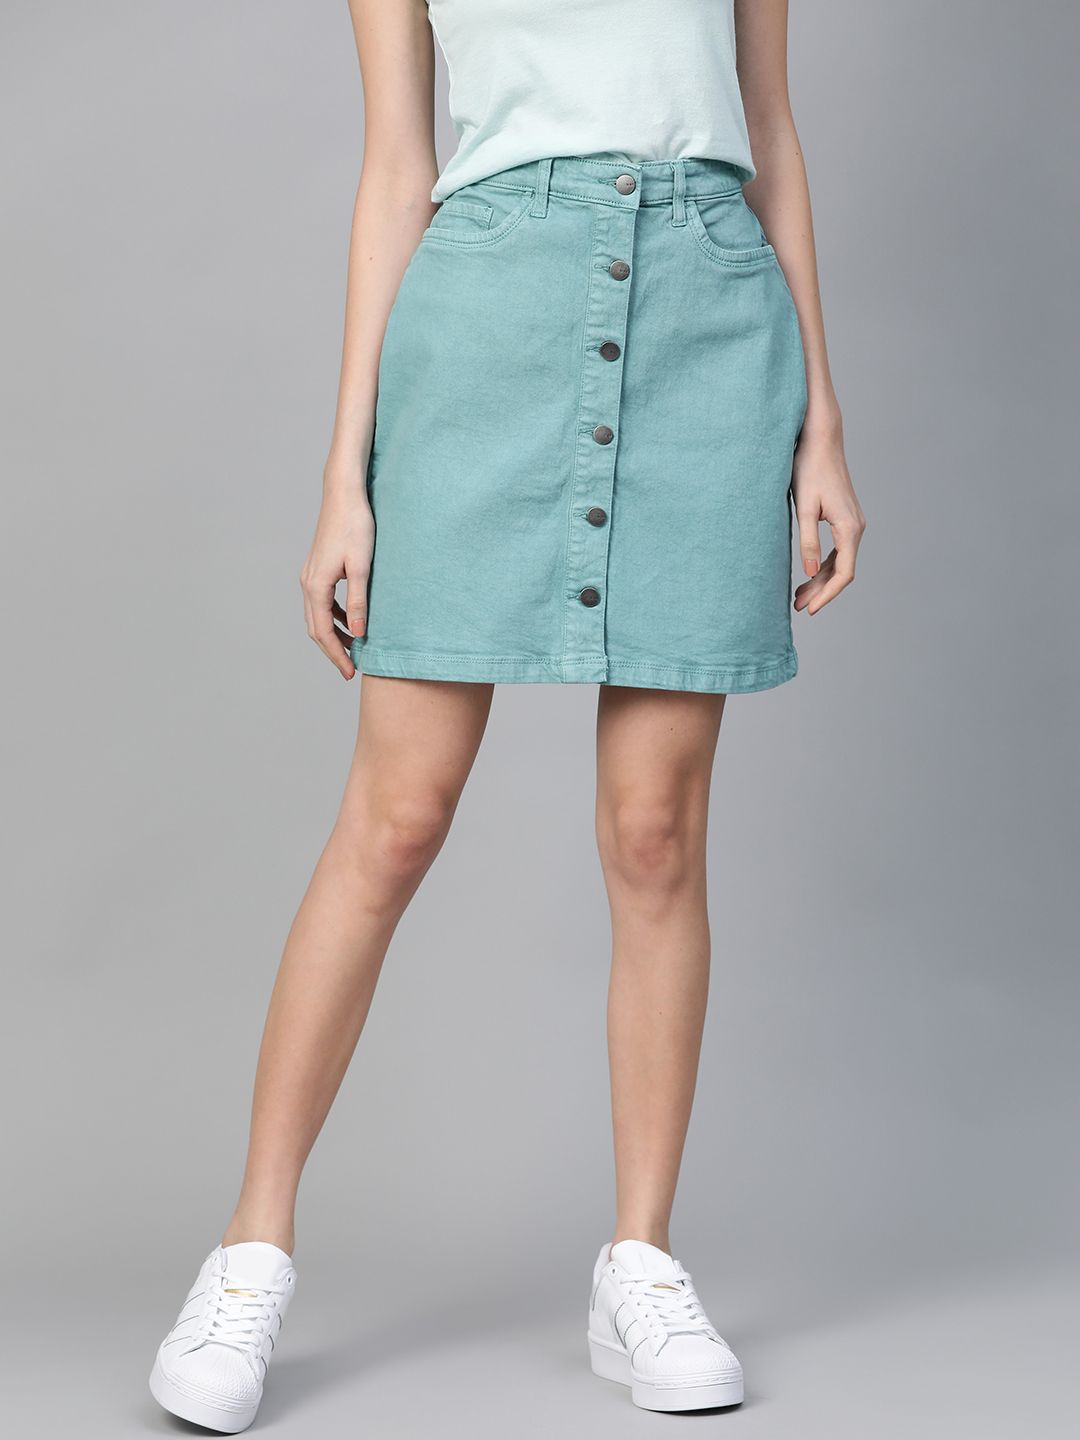 Mast & Harbour Sea Green Denim Straight Skirt Price in India